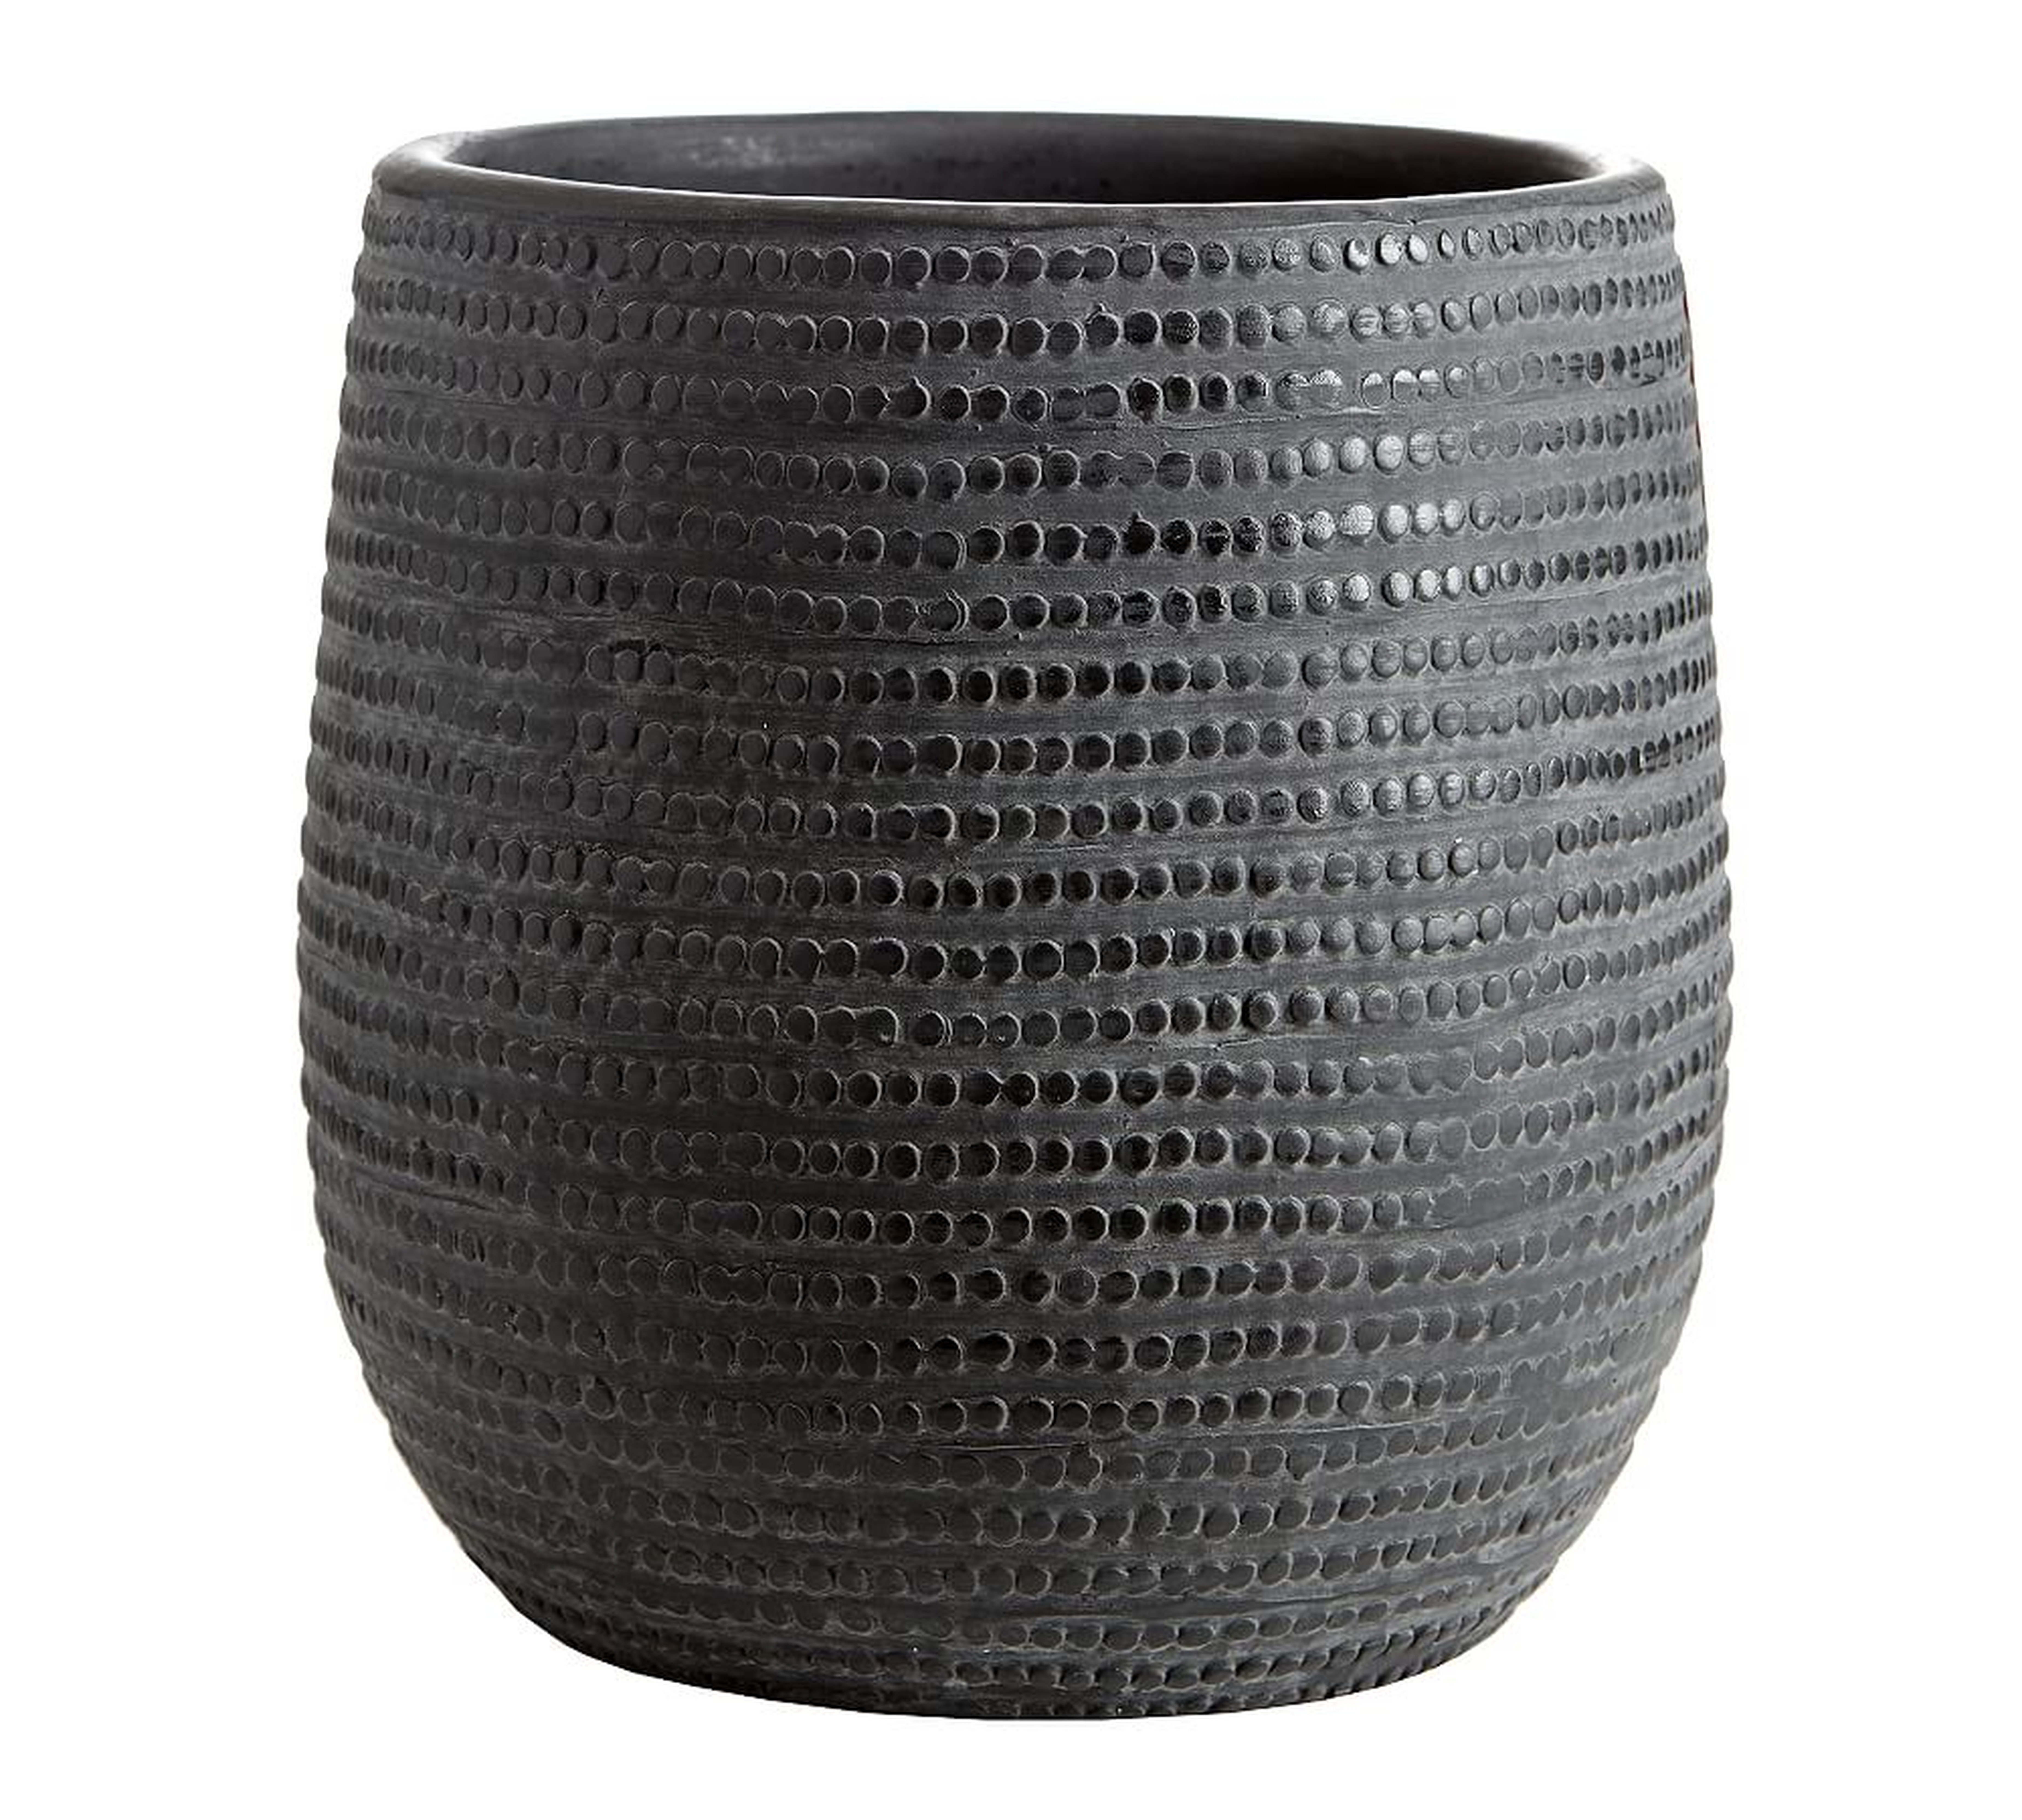 Cosgrove Ceramic Planter, Medium, Charcoal - Pottery Barn